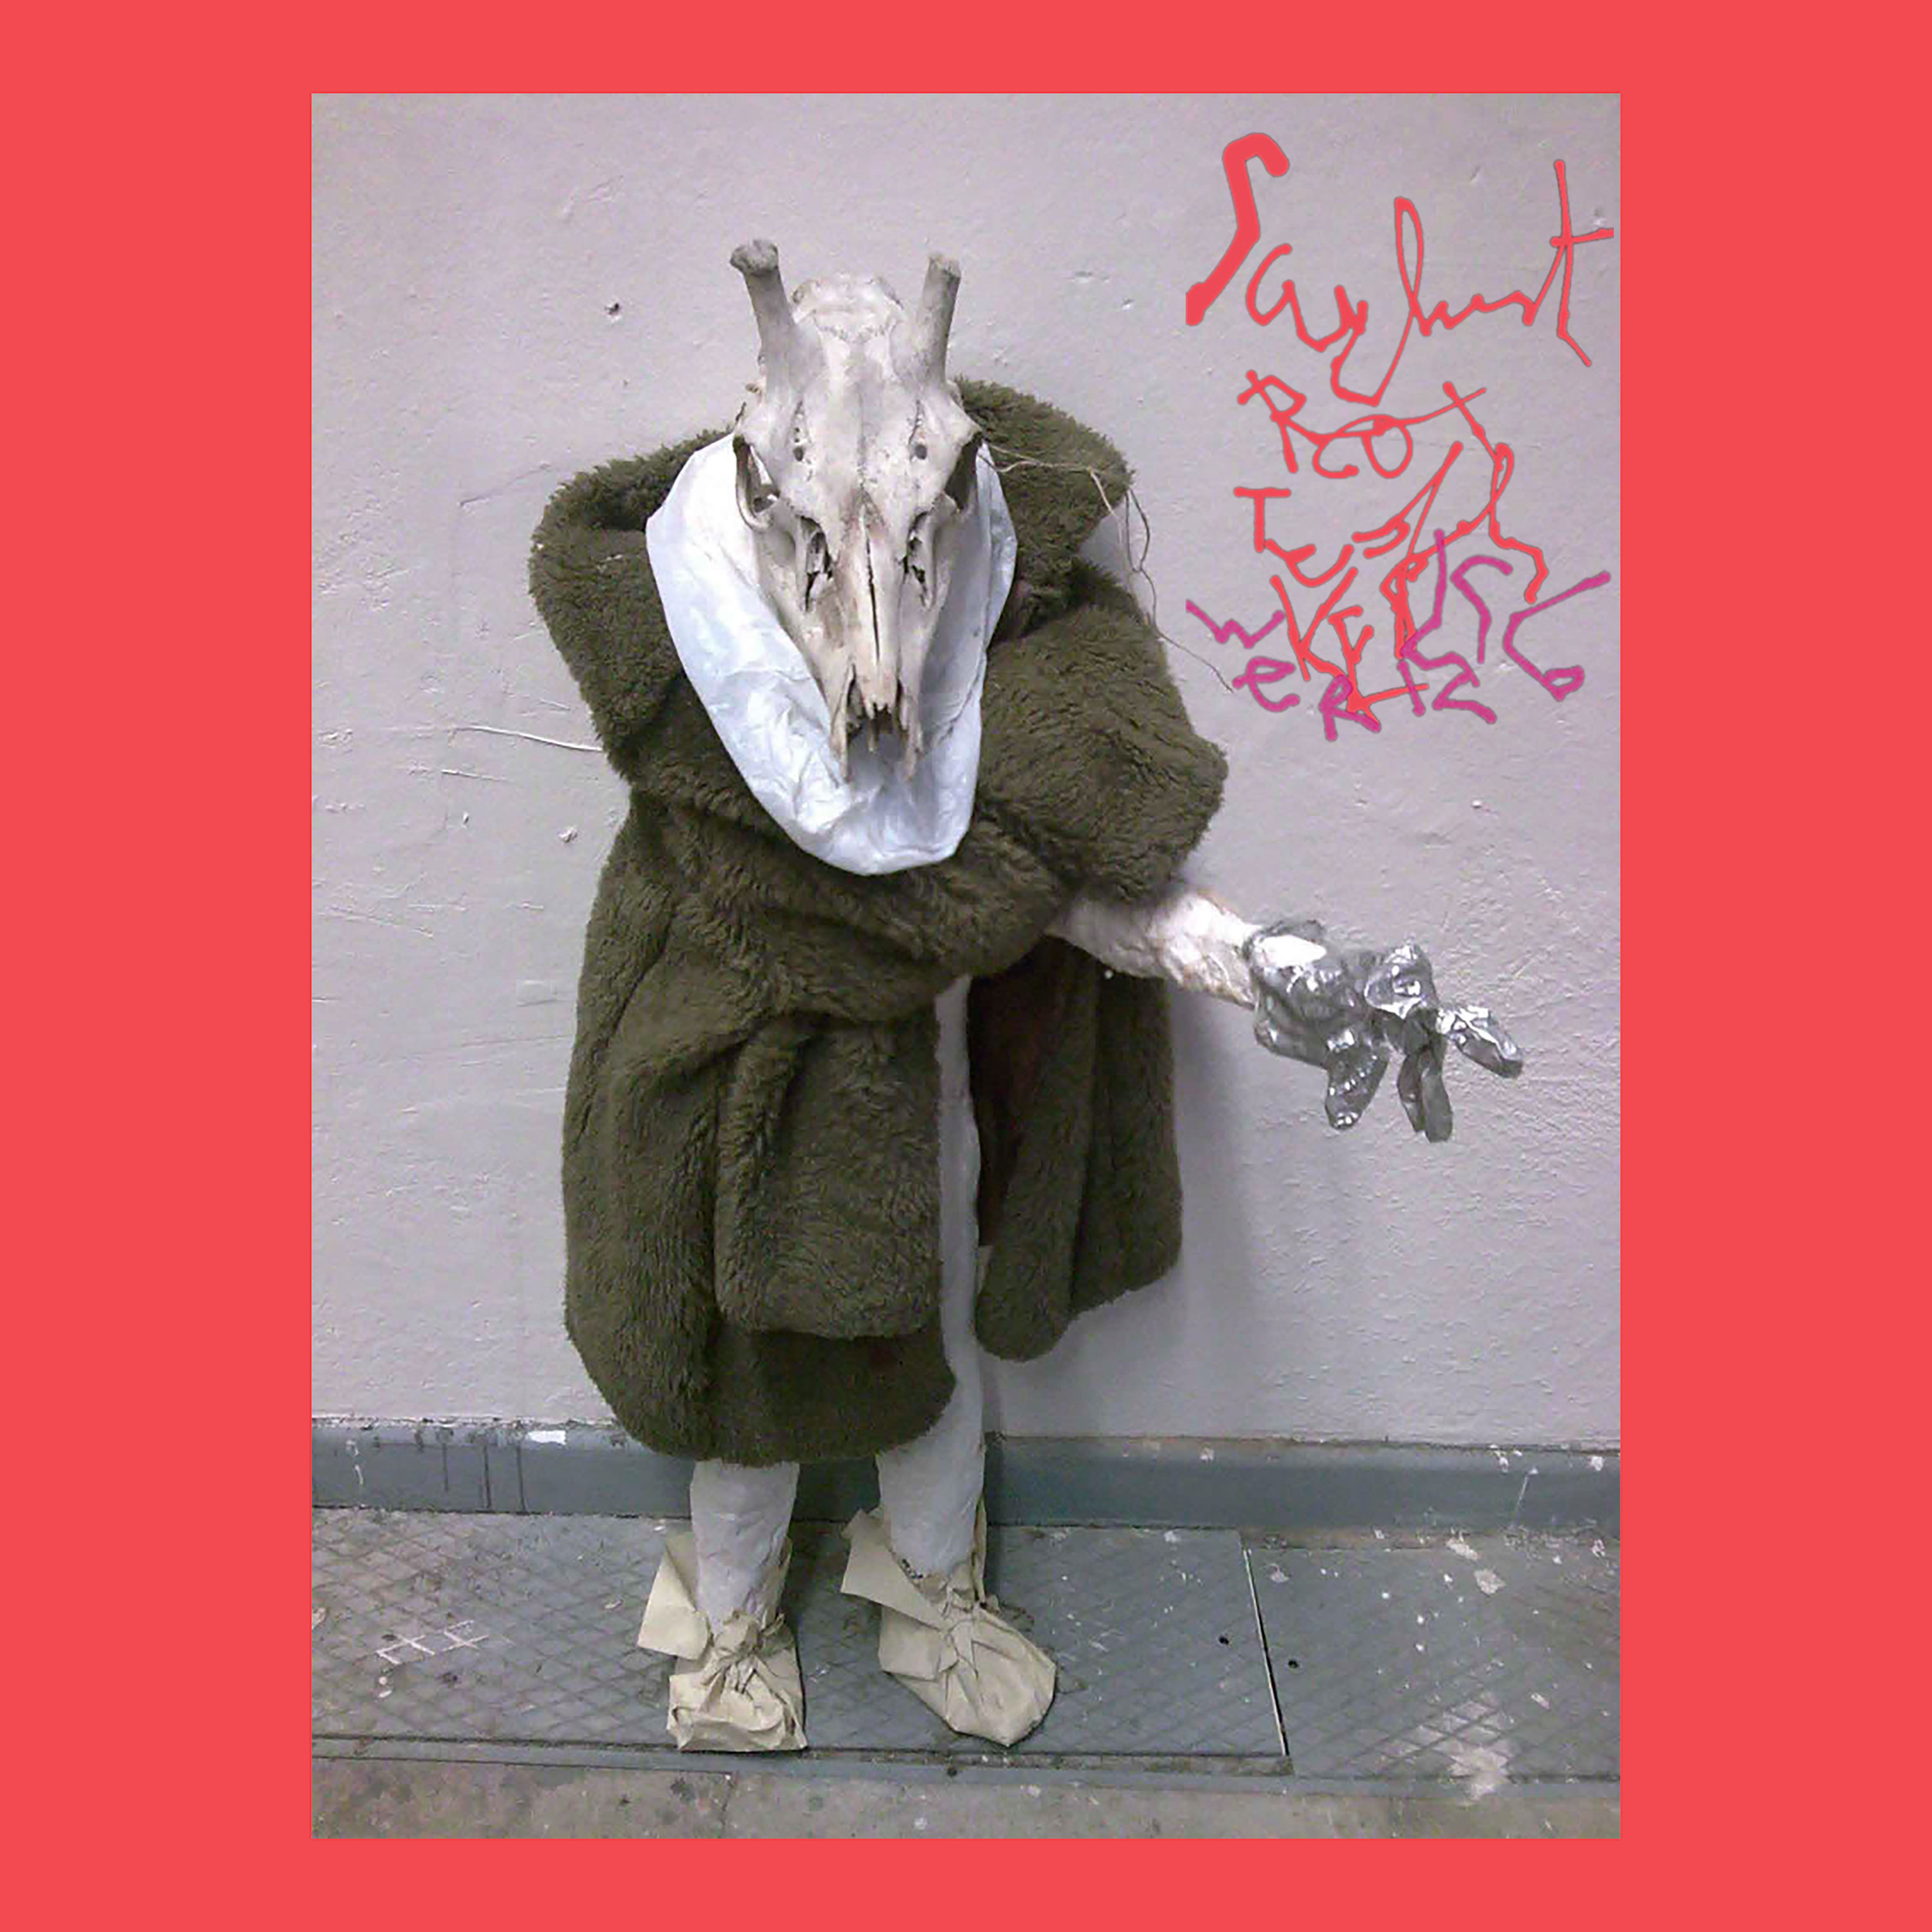 Saulust Rex - Teufelskerlwerk 6 Cover